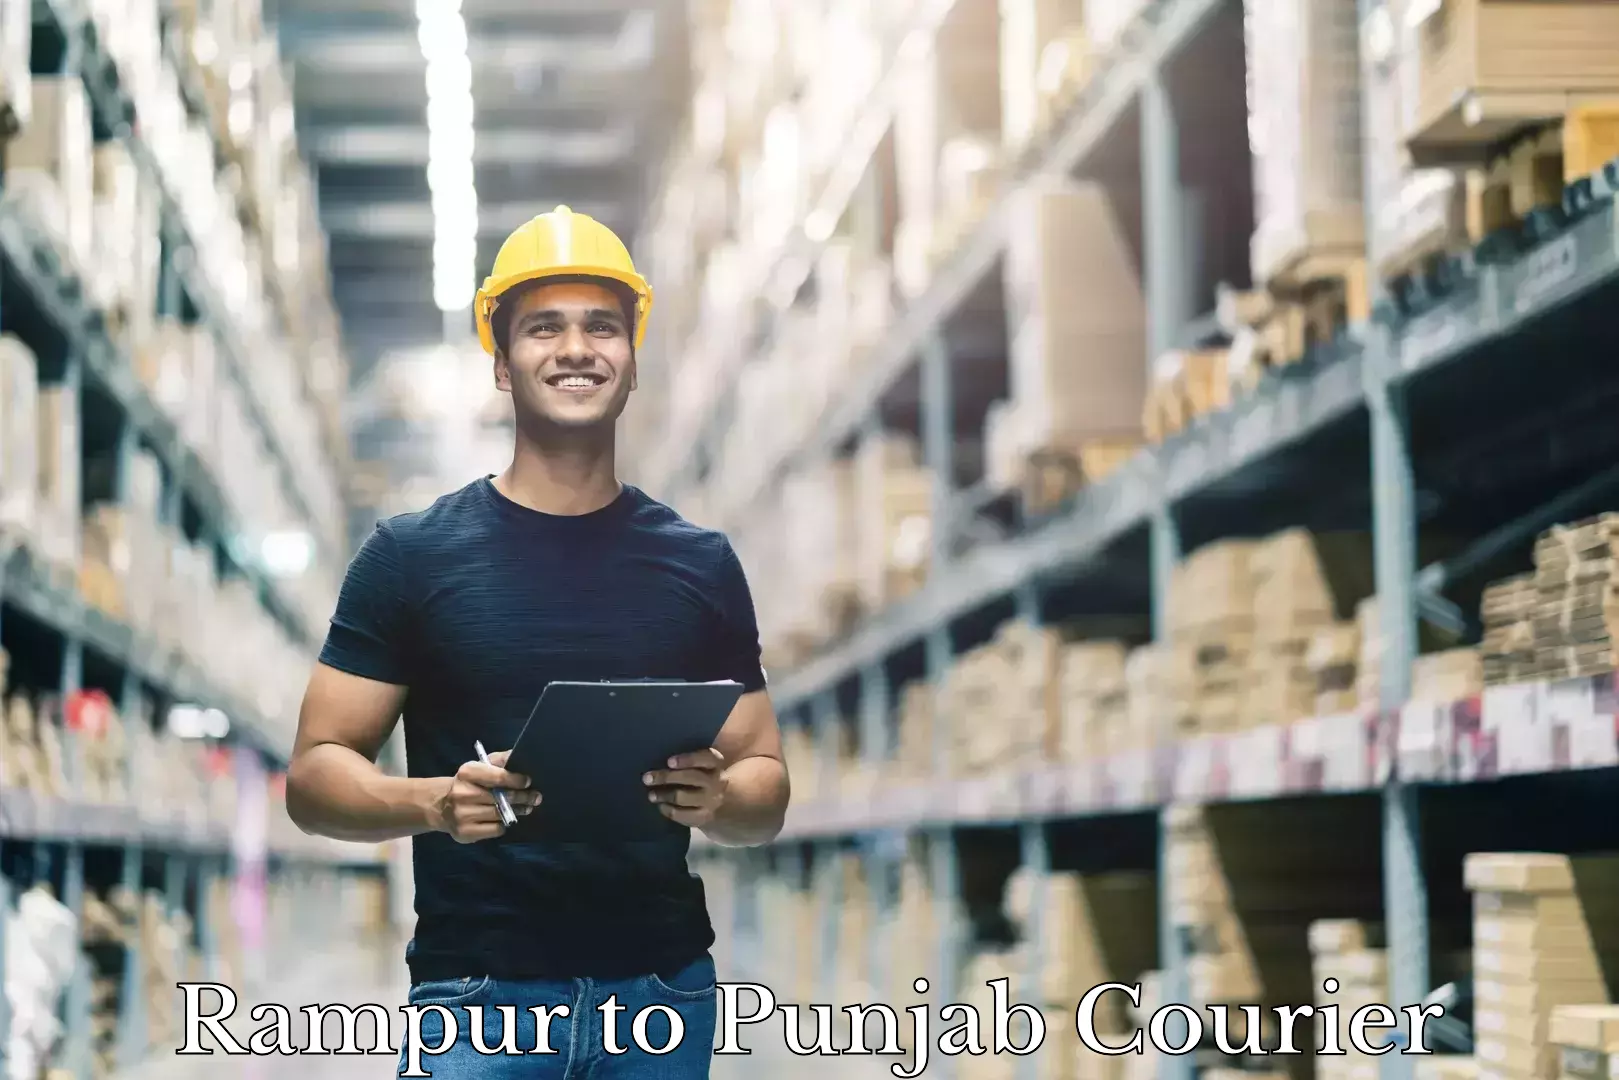 Professional moving company Rampur to Punjab